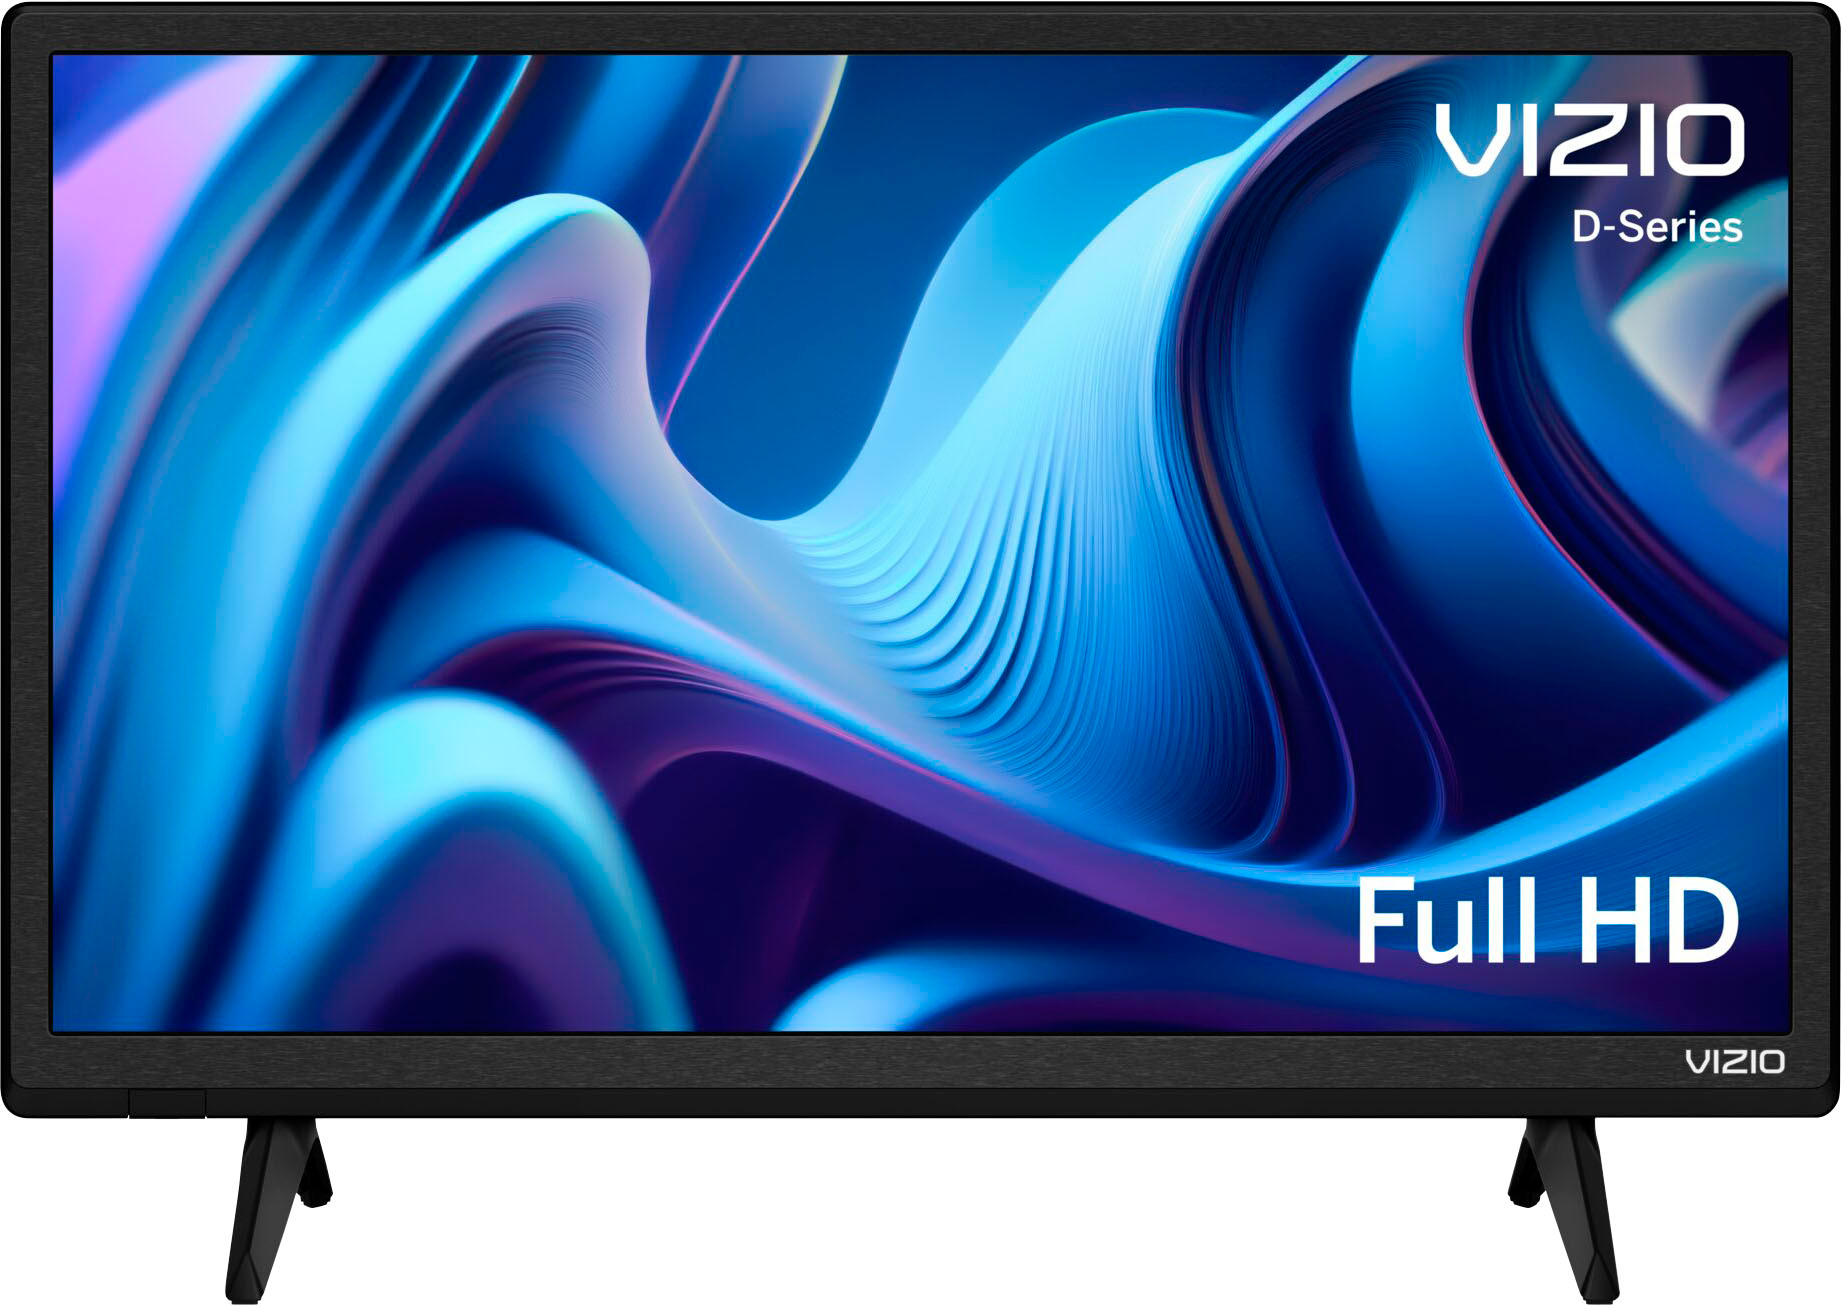 VIZIO D-Series 24 Full HD Smart TV